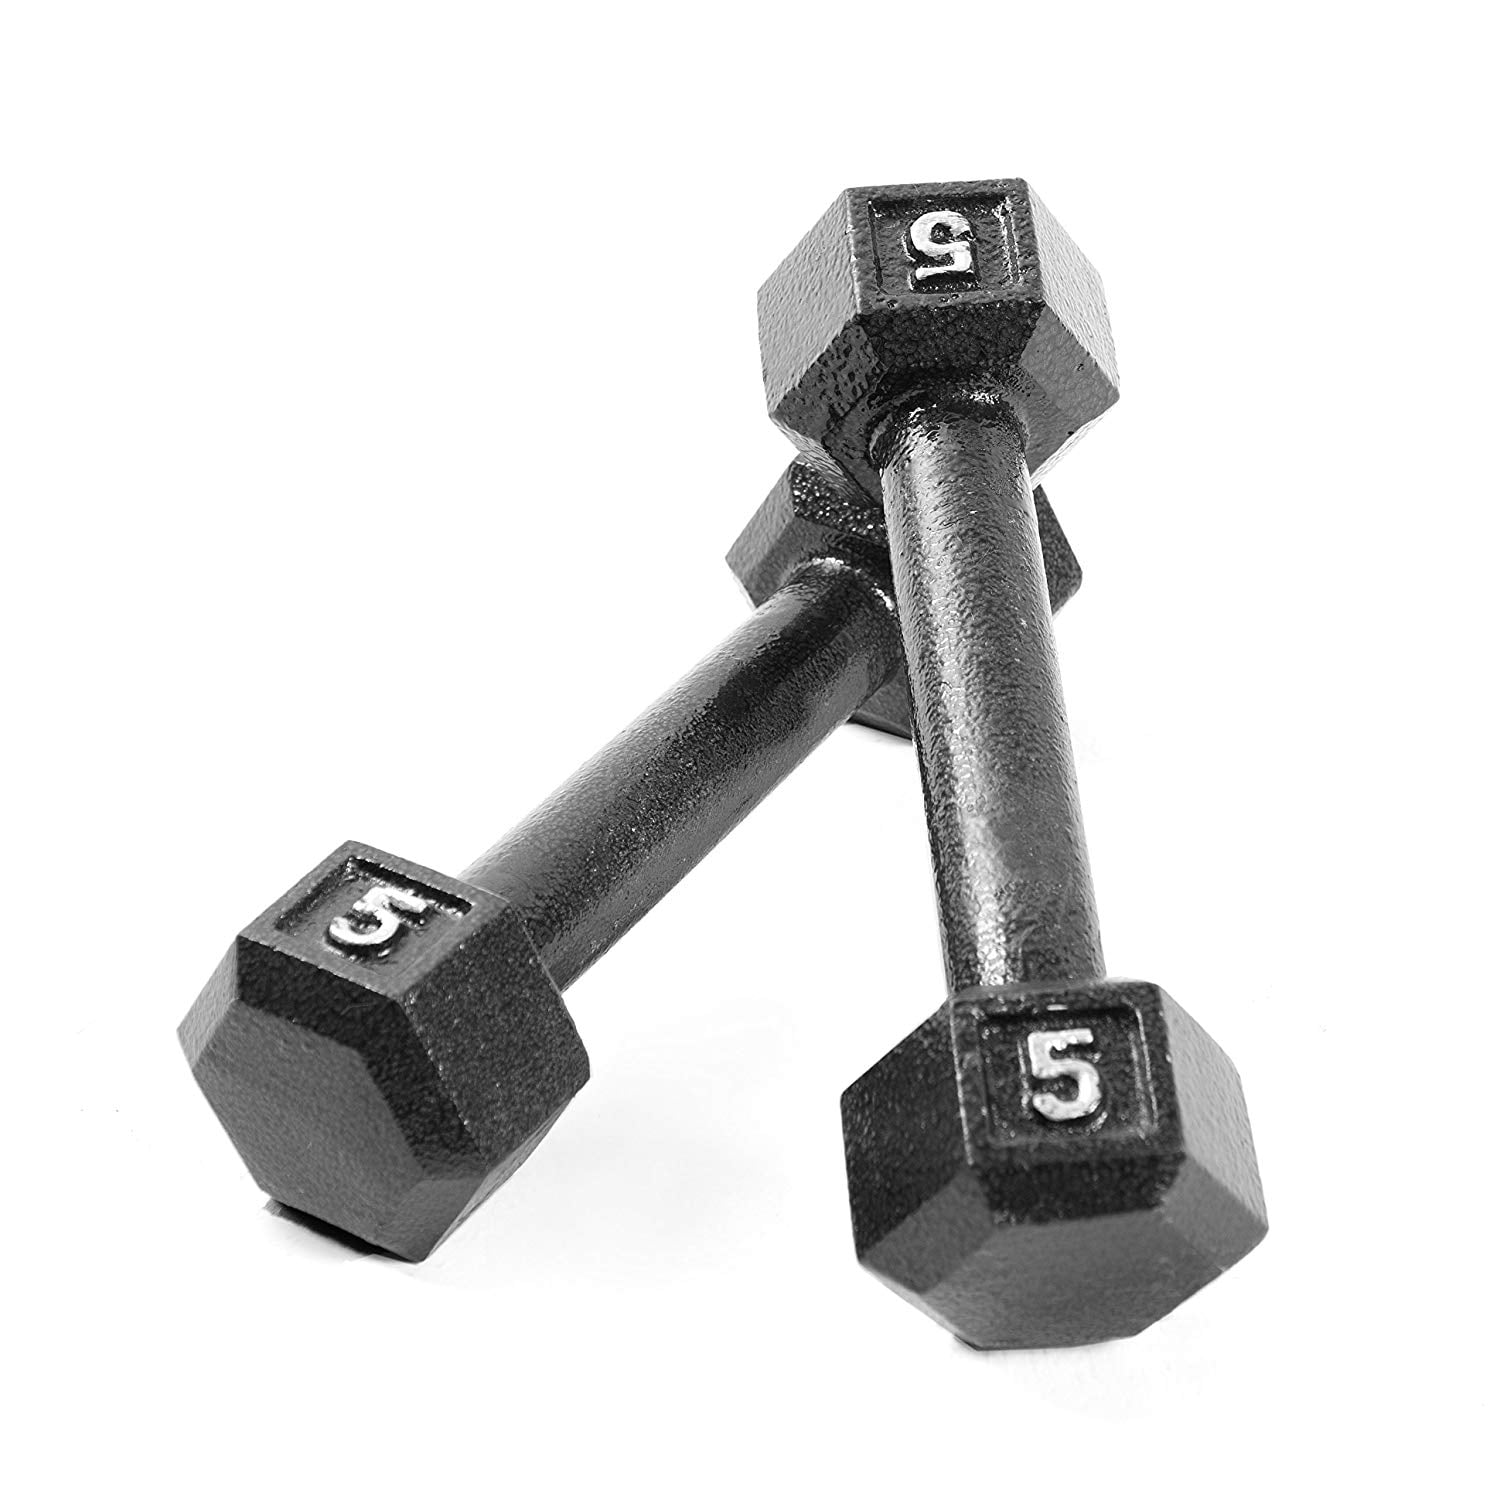 Details about   Neoprene Dumbbells Hexagonal Cast Iron Weights Home Gym Workout Aerobic 1-10kg 